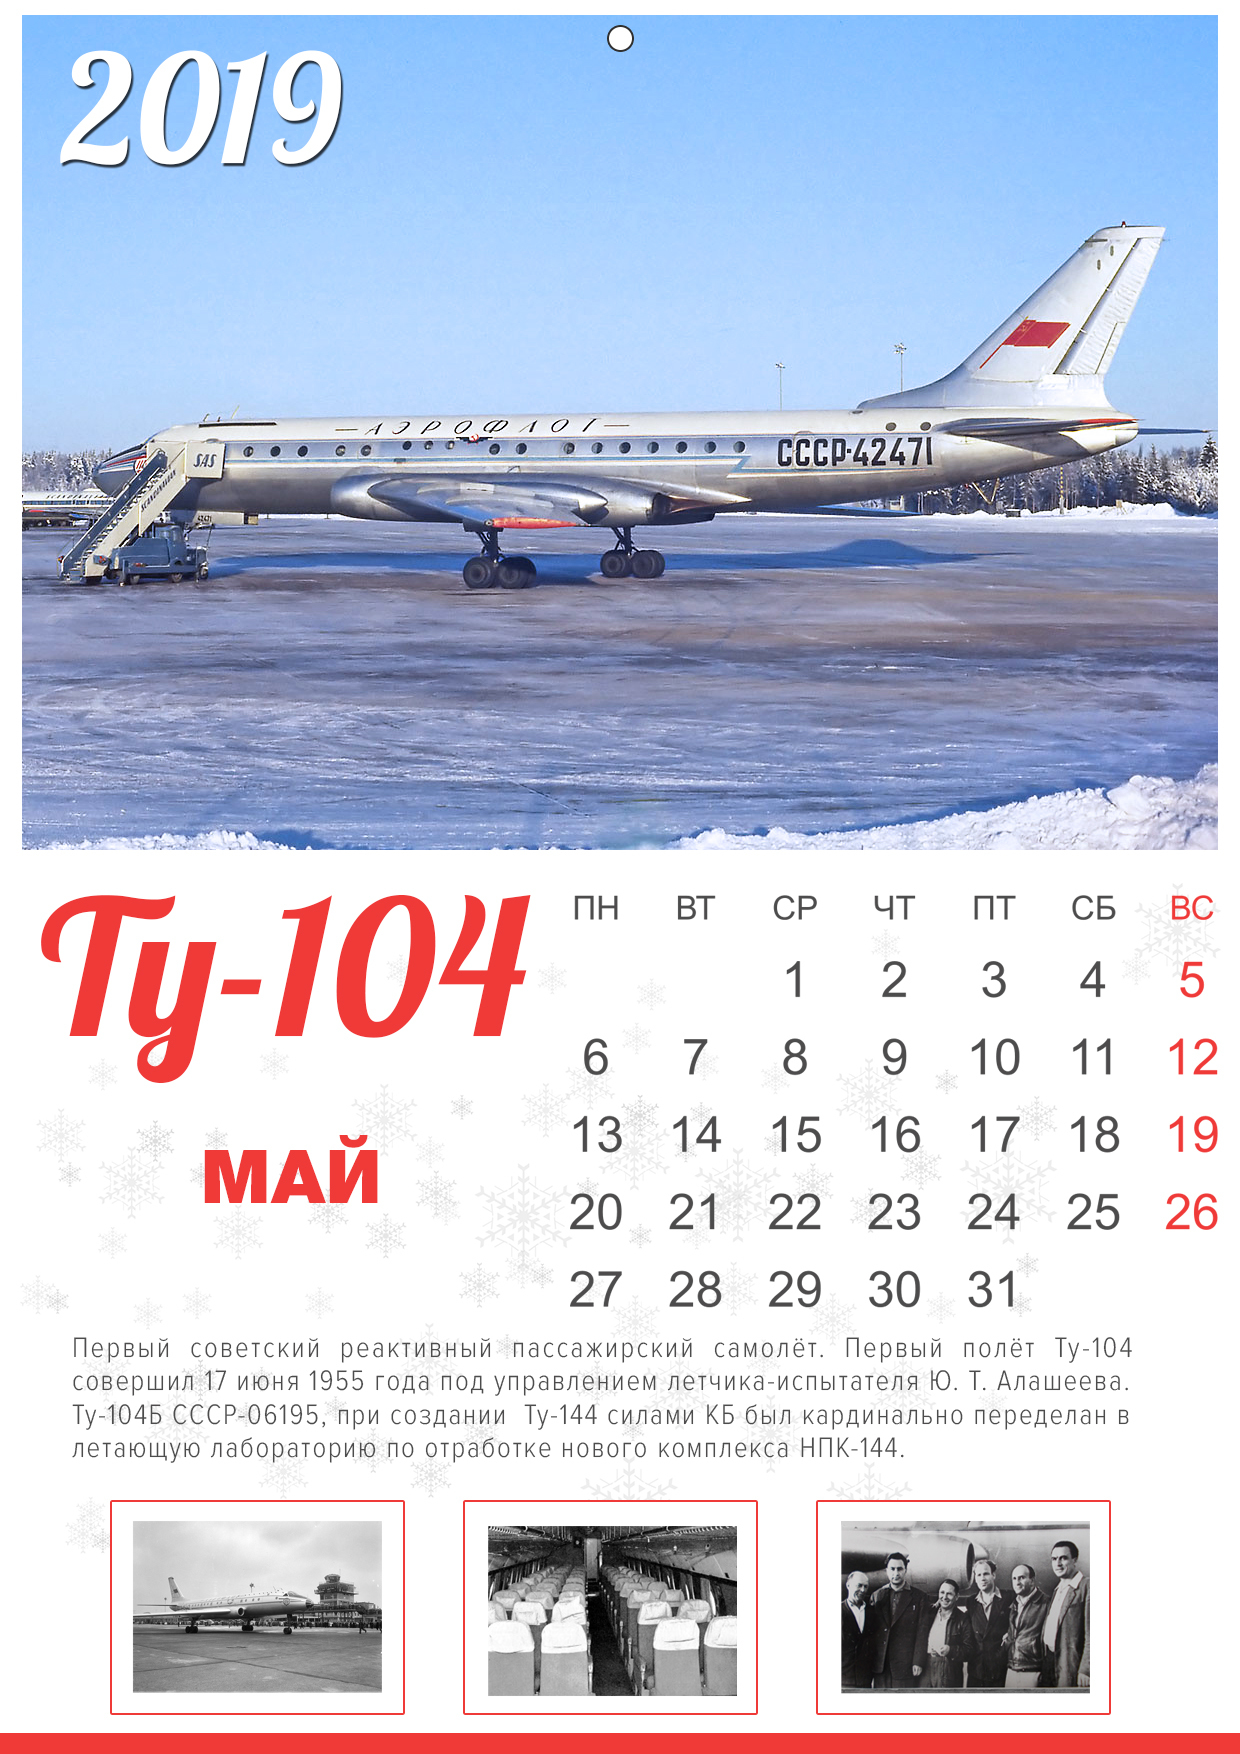 Traditional aviation calendar. - My, Aviation, The calendar, 2019, New Year, Longpost